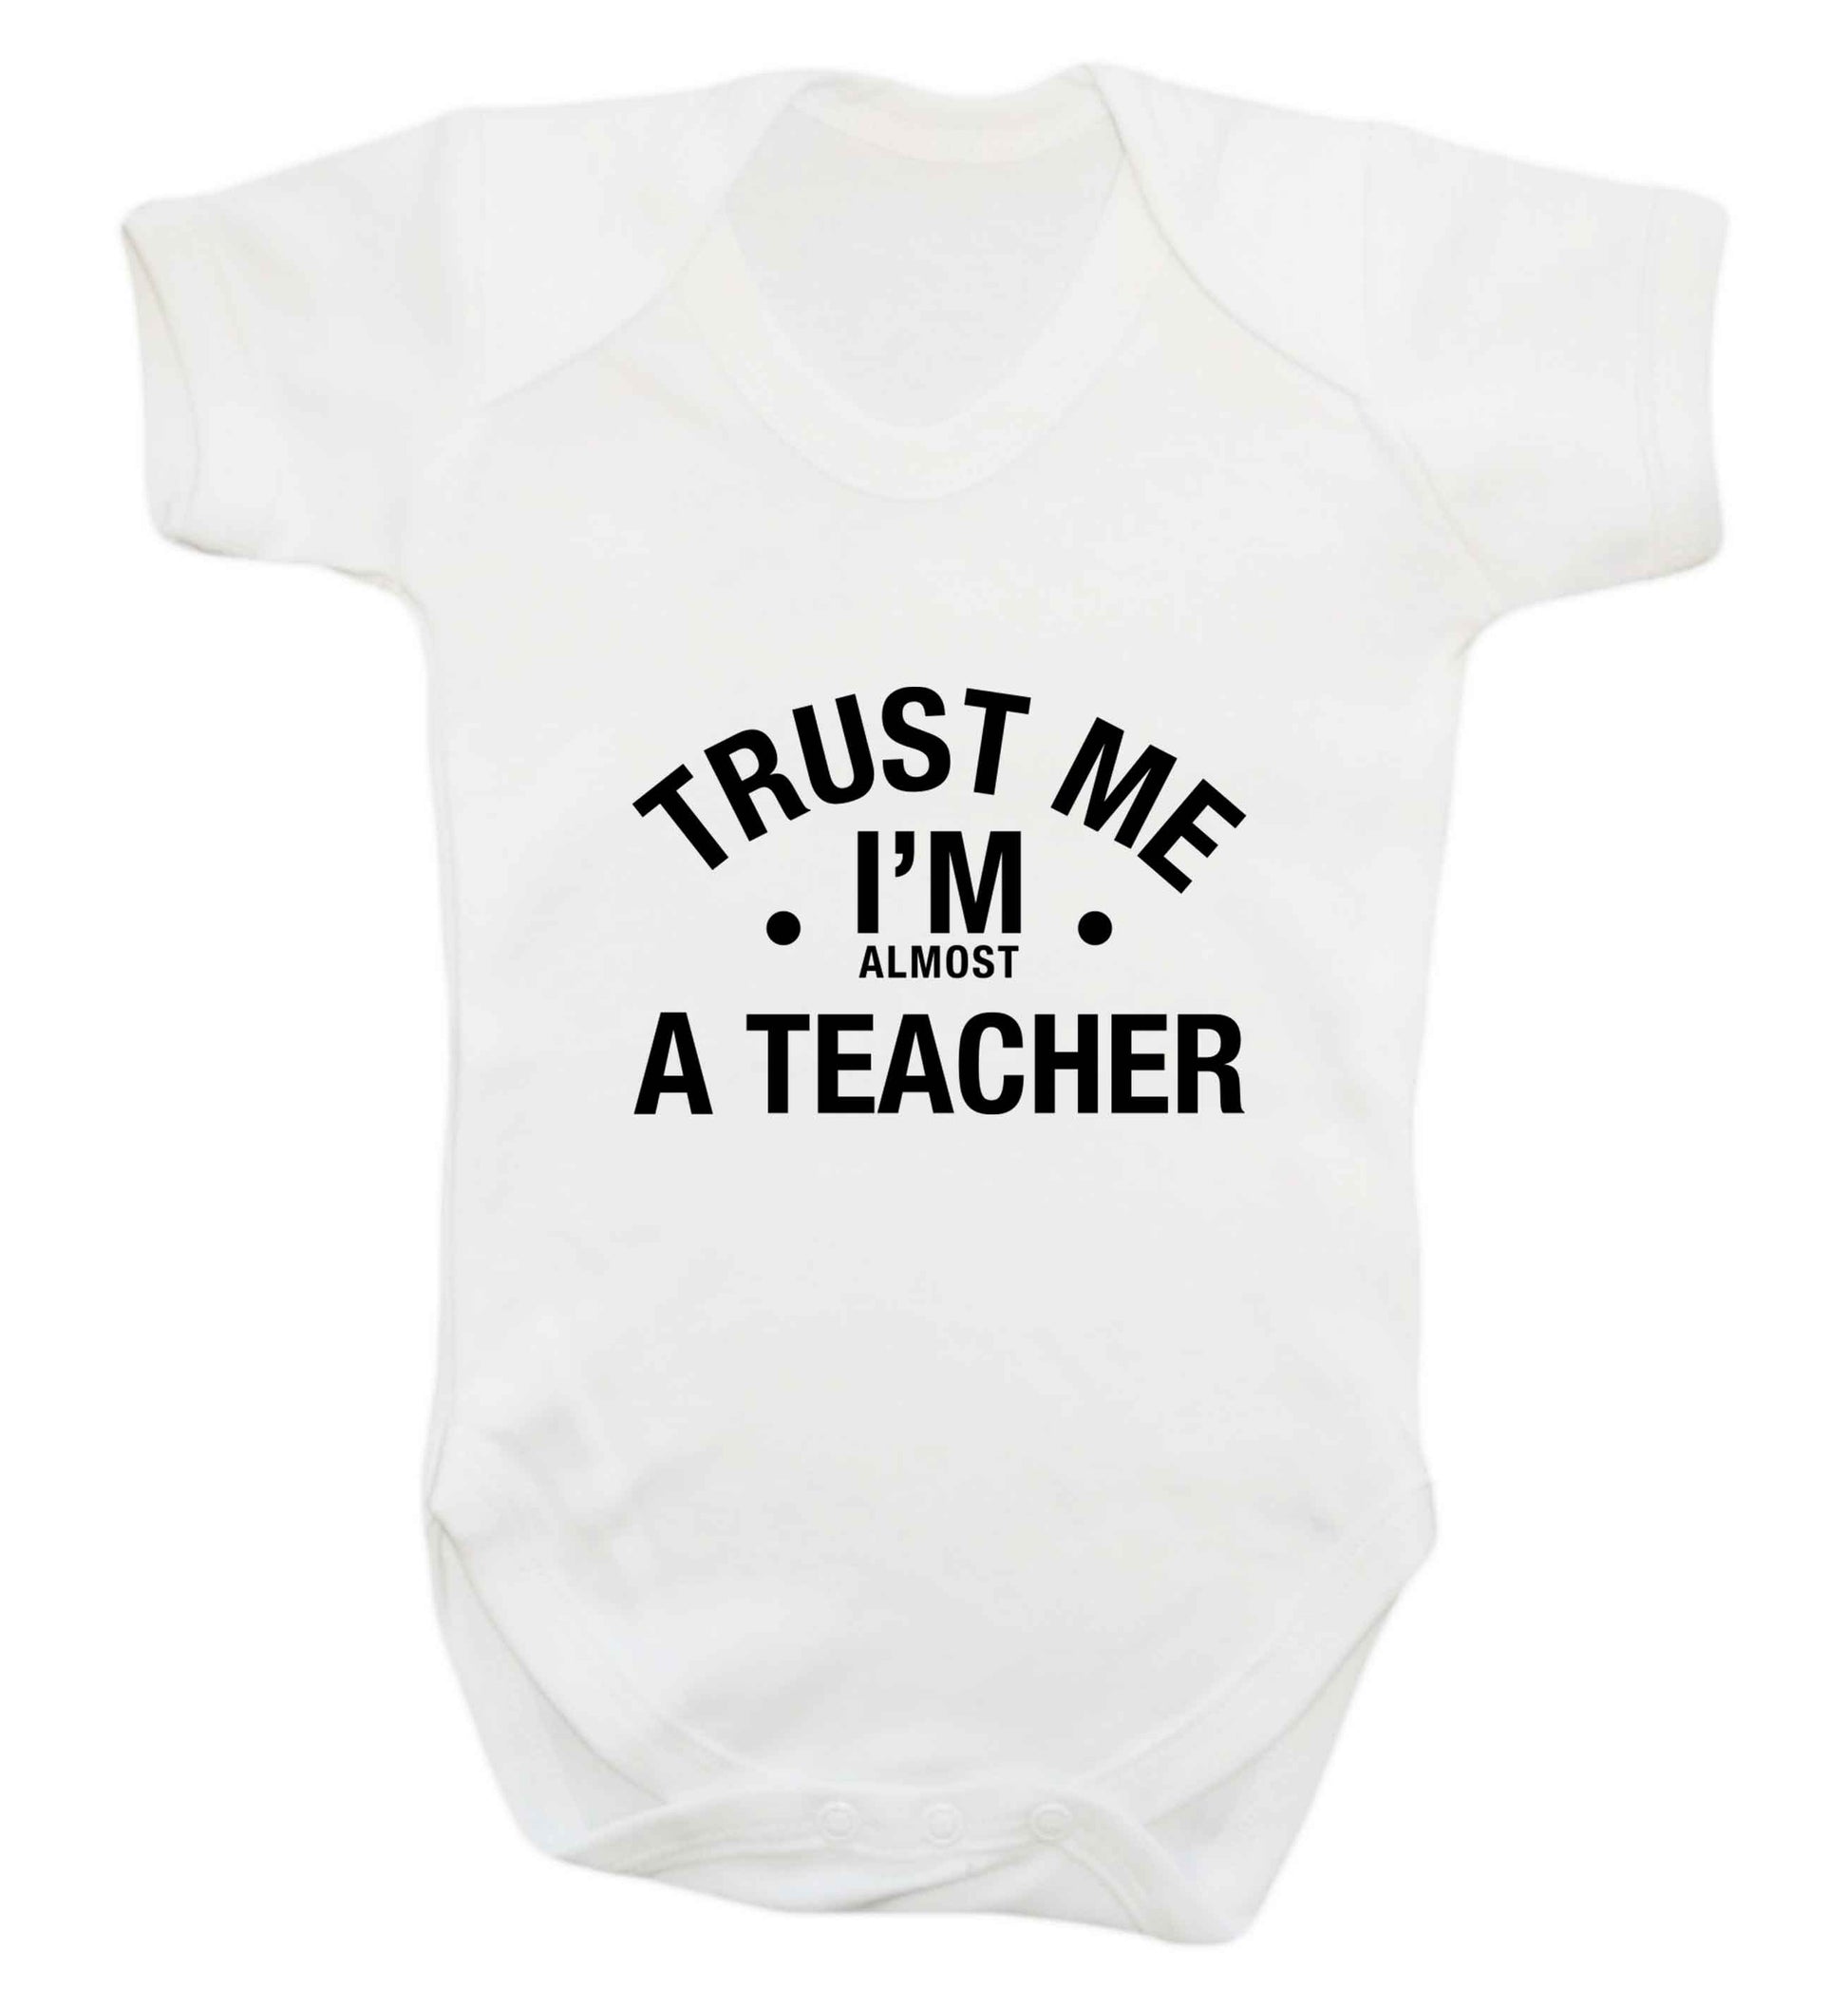 Trust me I'm almost a teacher baby vest white 18-24 months